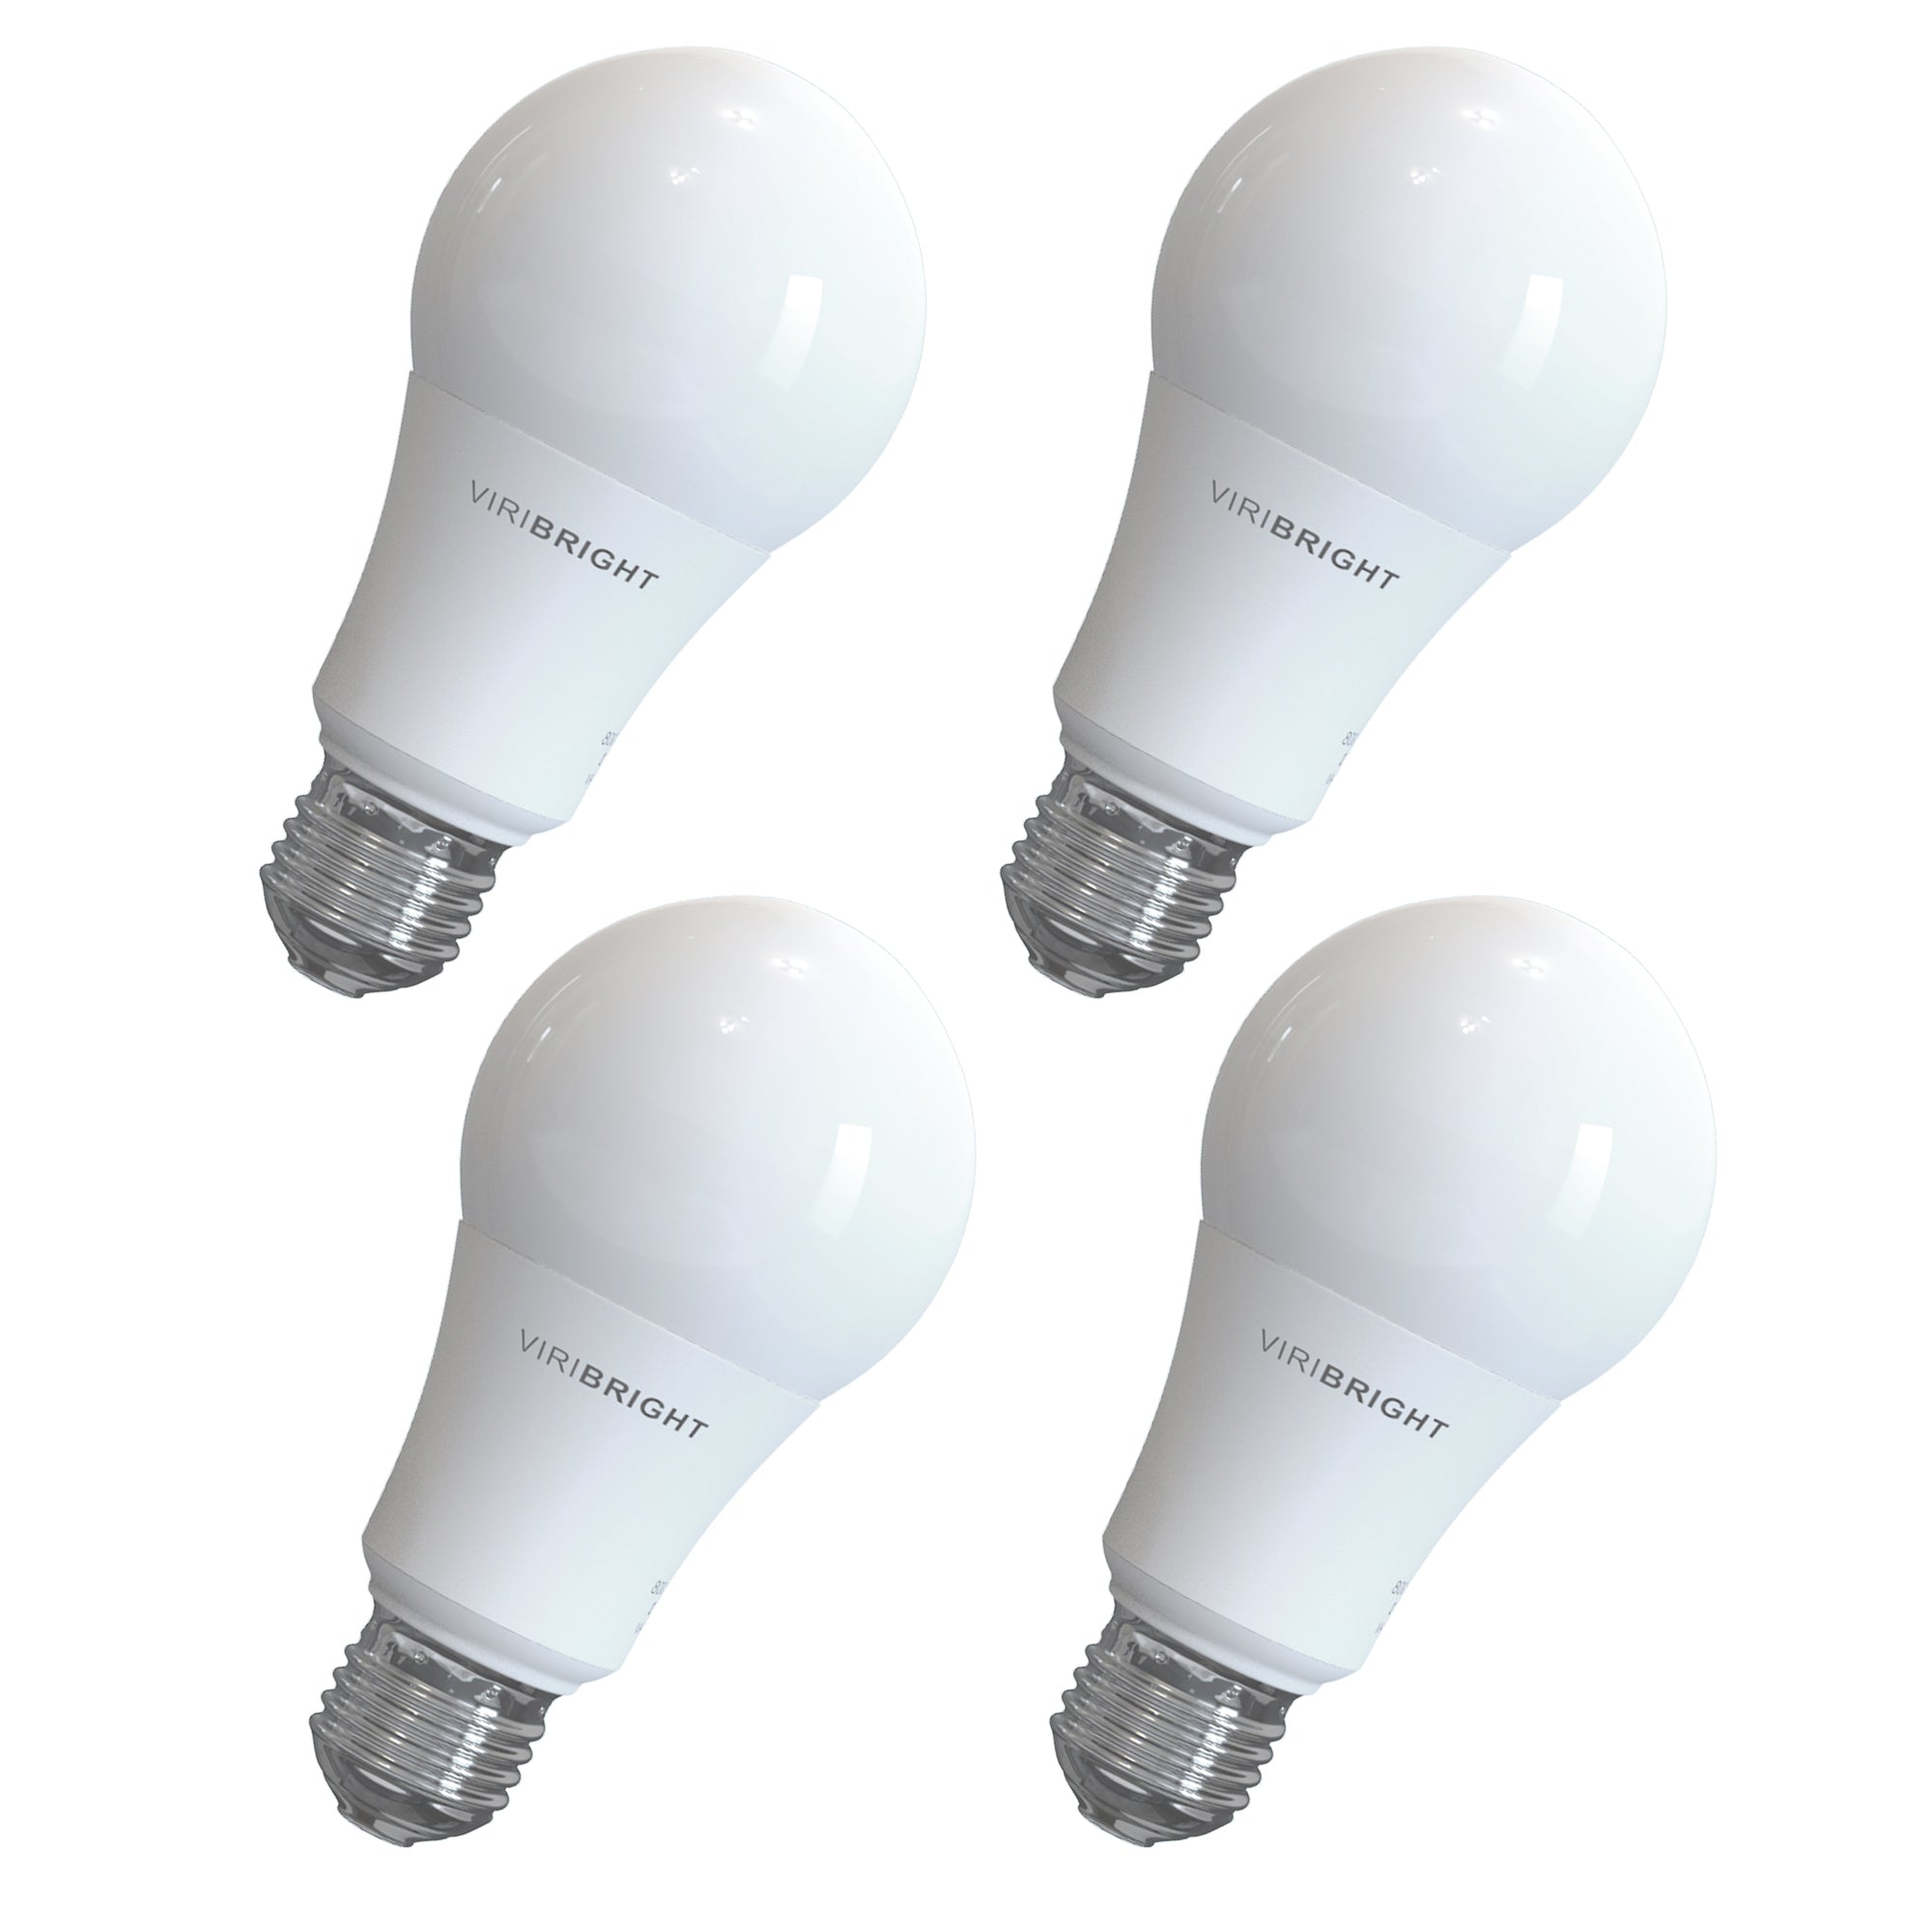 Efficient E26 standard LED bulb